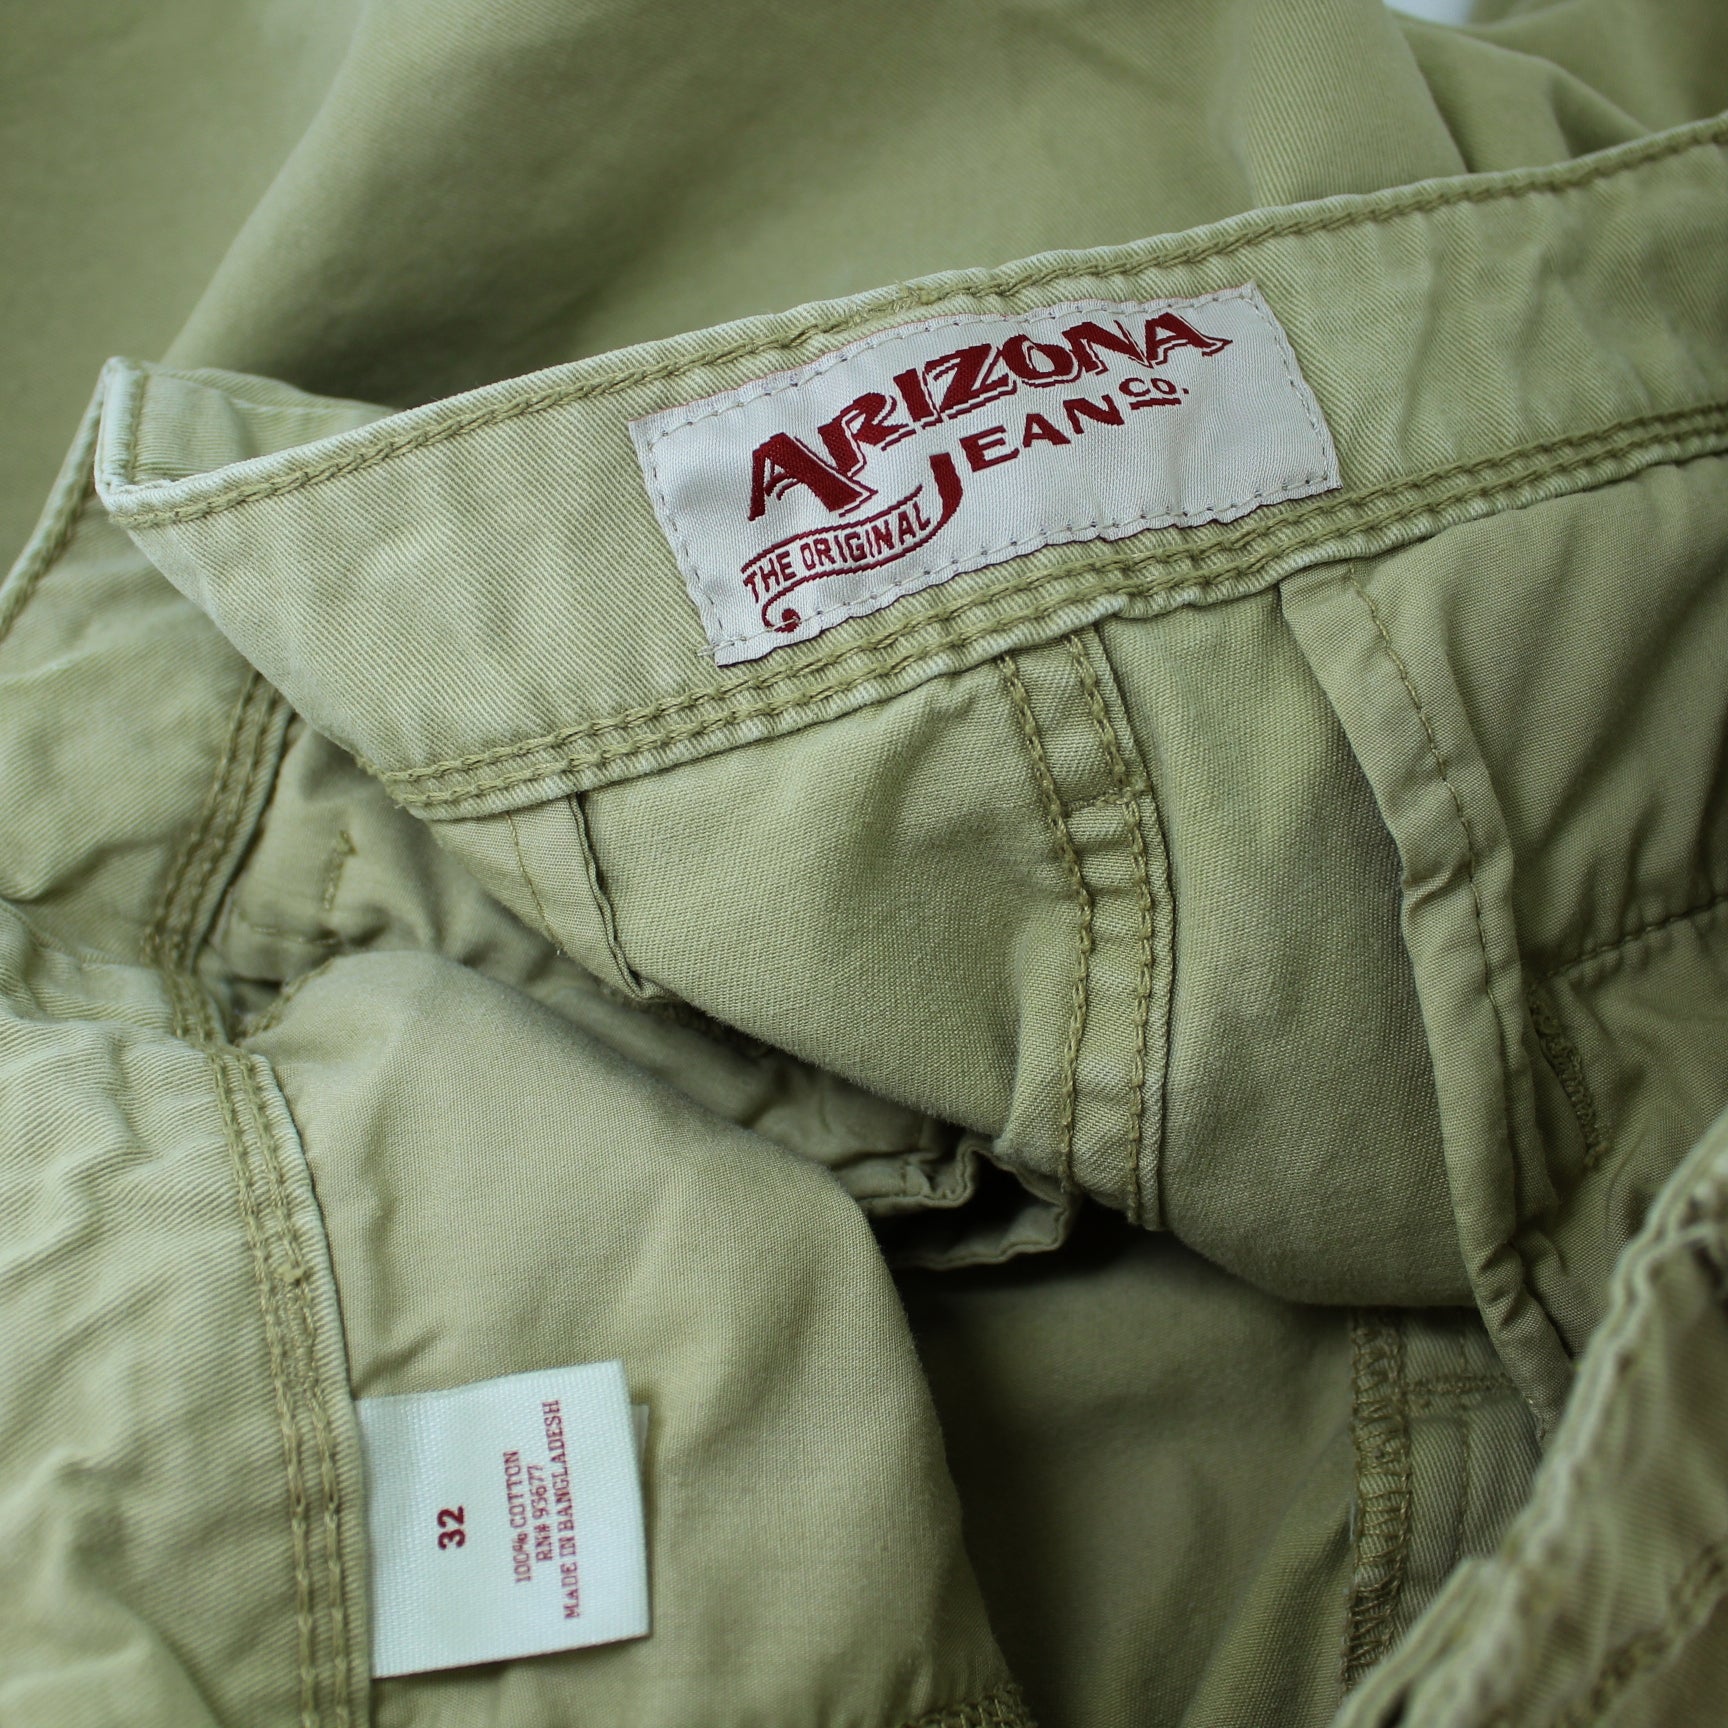 Arizona 100% Cotton Khaki Short Pants Watch Pocket Design Size 32 Inseam 9" original arizona tag and size care tags